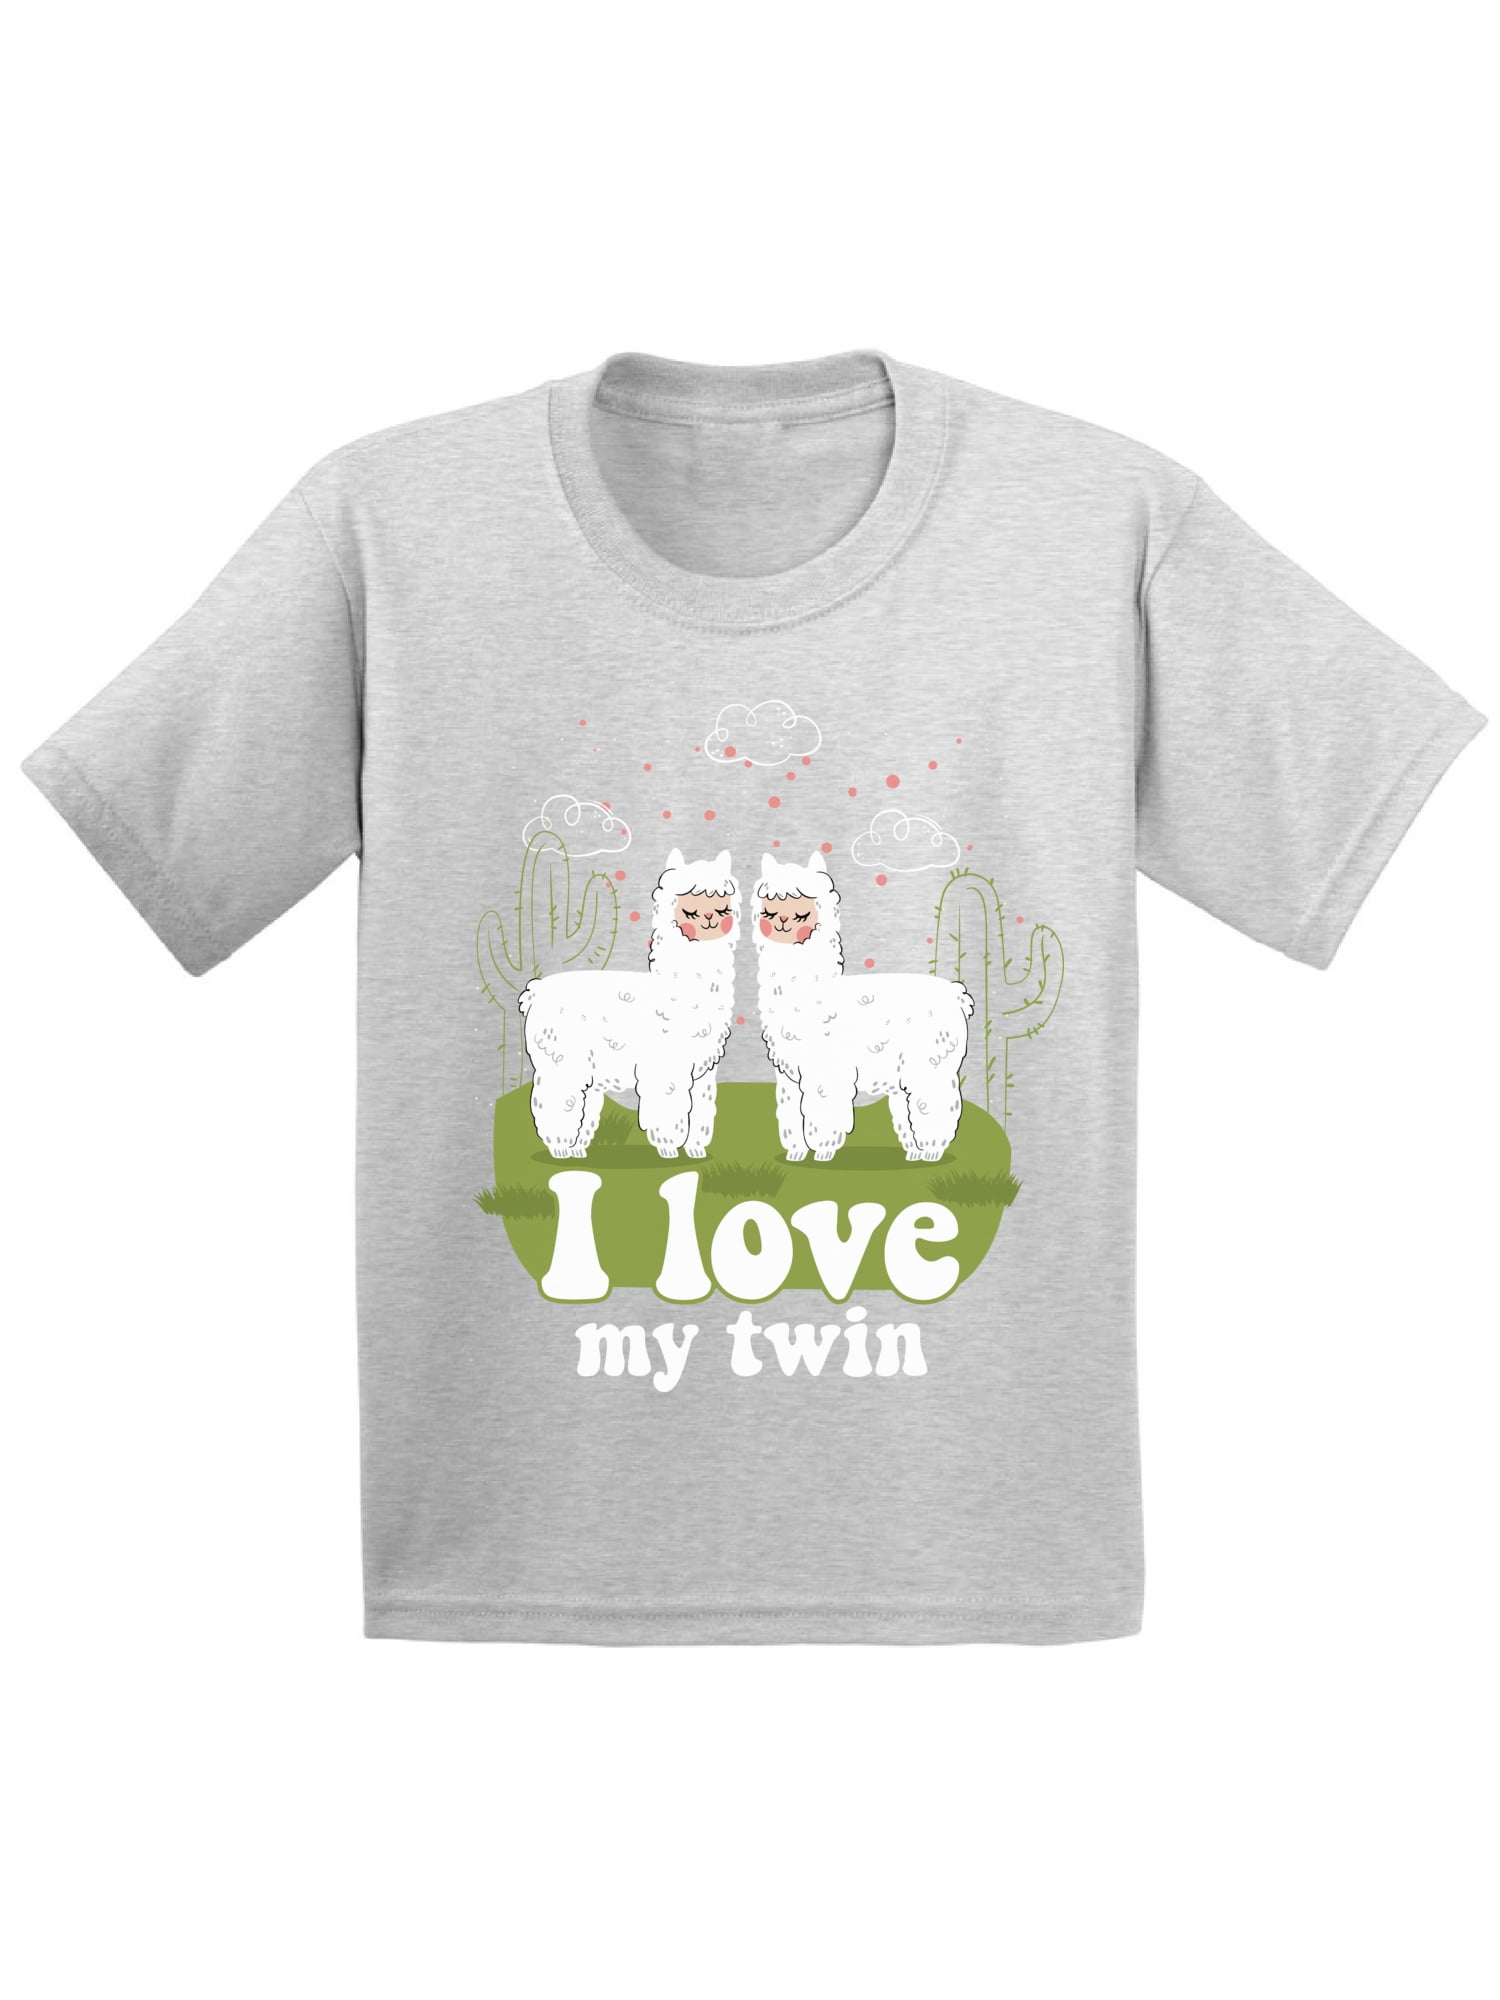 twins birthday shirts